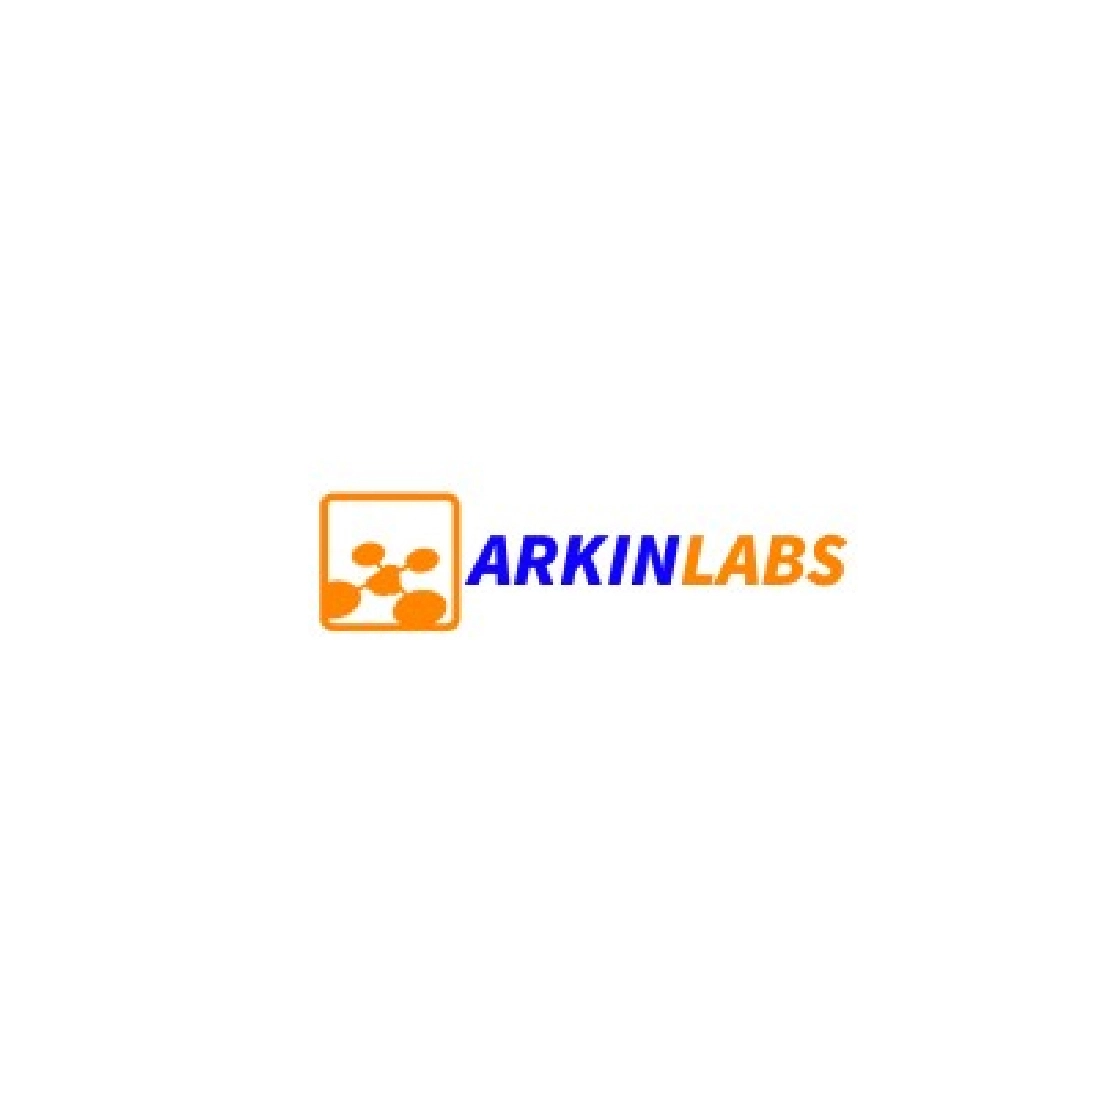 Arkin-labs